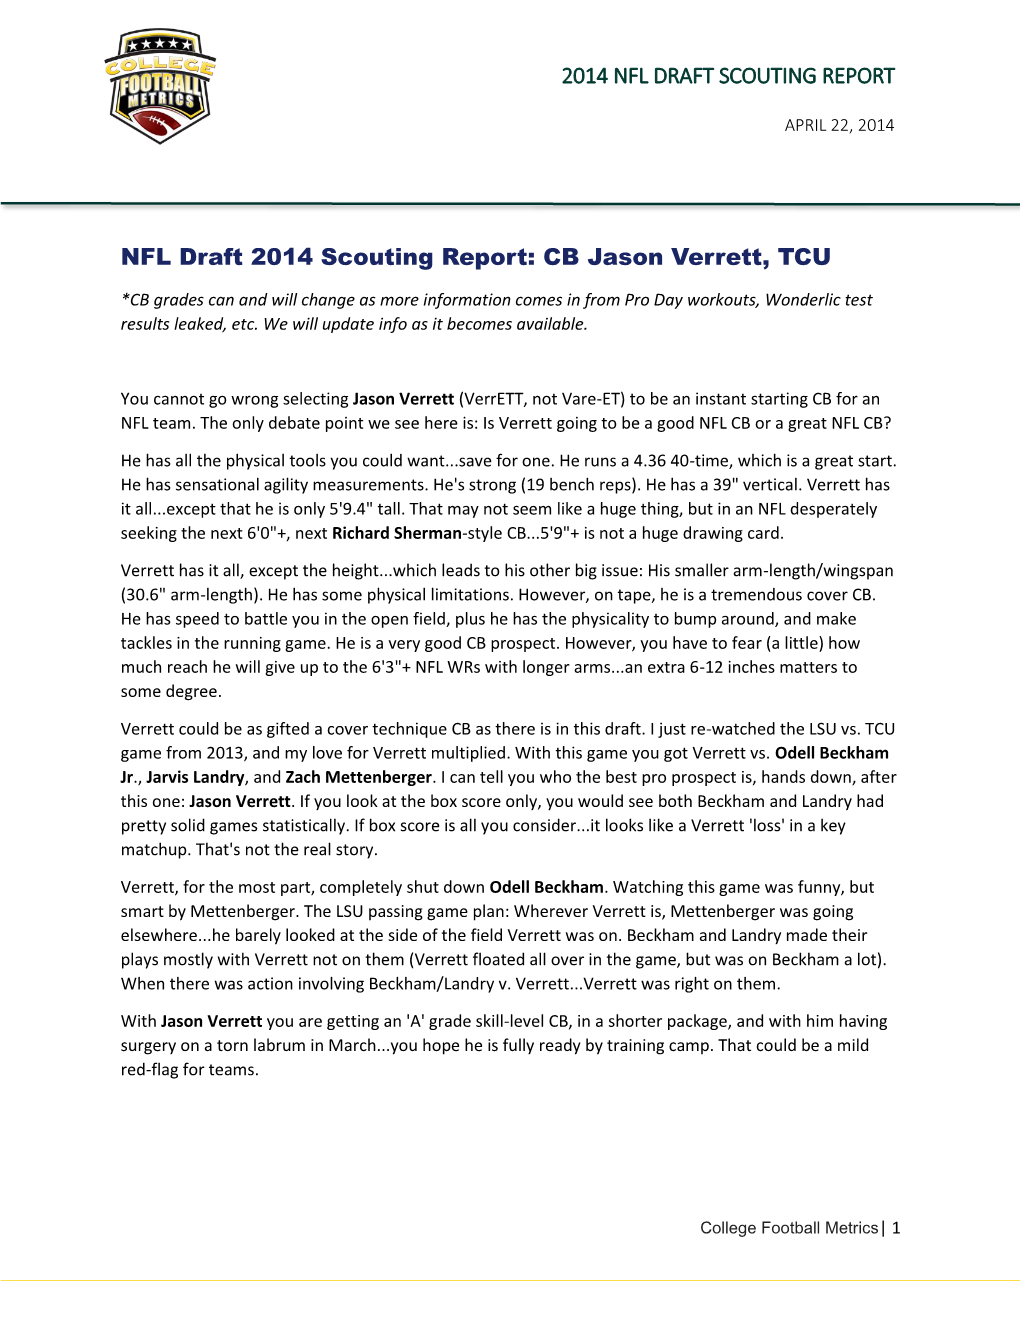 NFL Draft 2014 Scouting Report: CB Jason Verrett, TCU